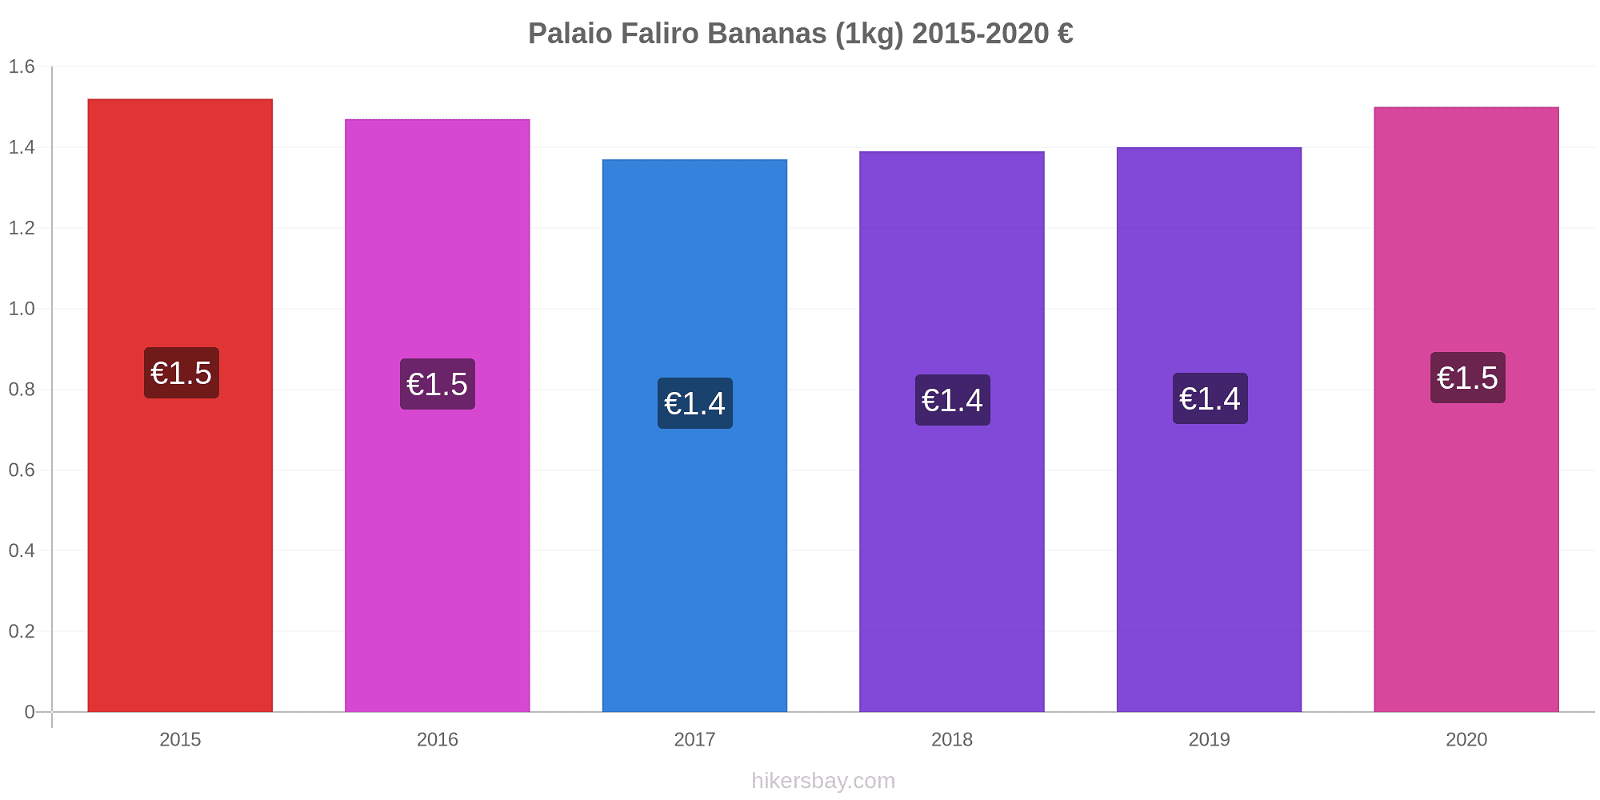 Palaio Faliro price changes Bananas (1kg) hikersbay.com